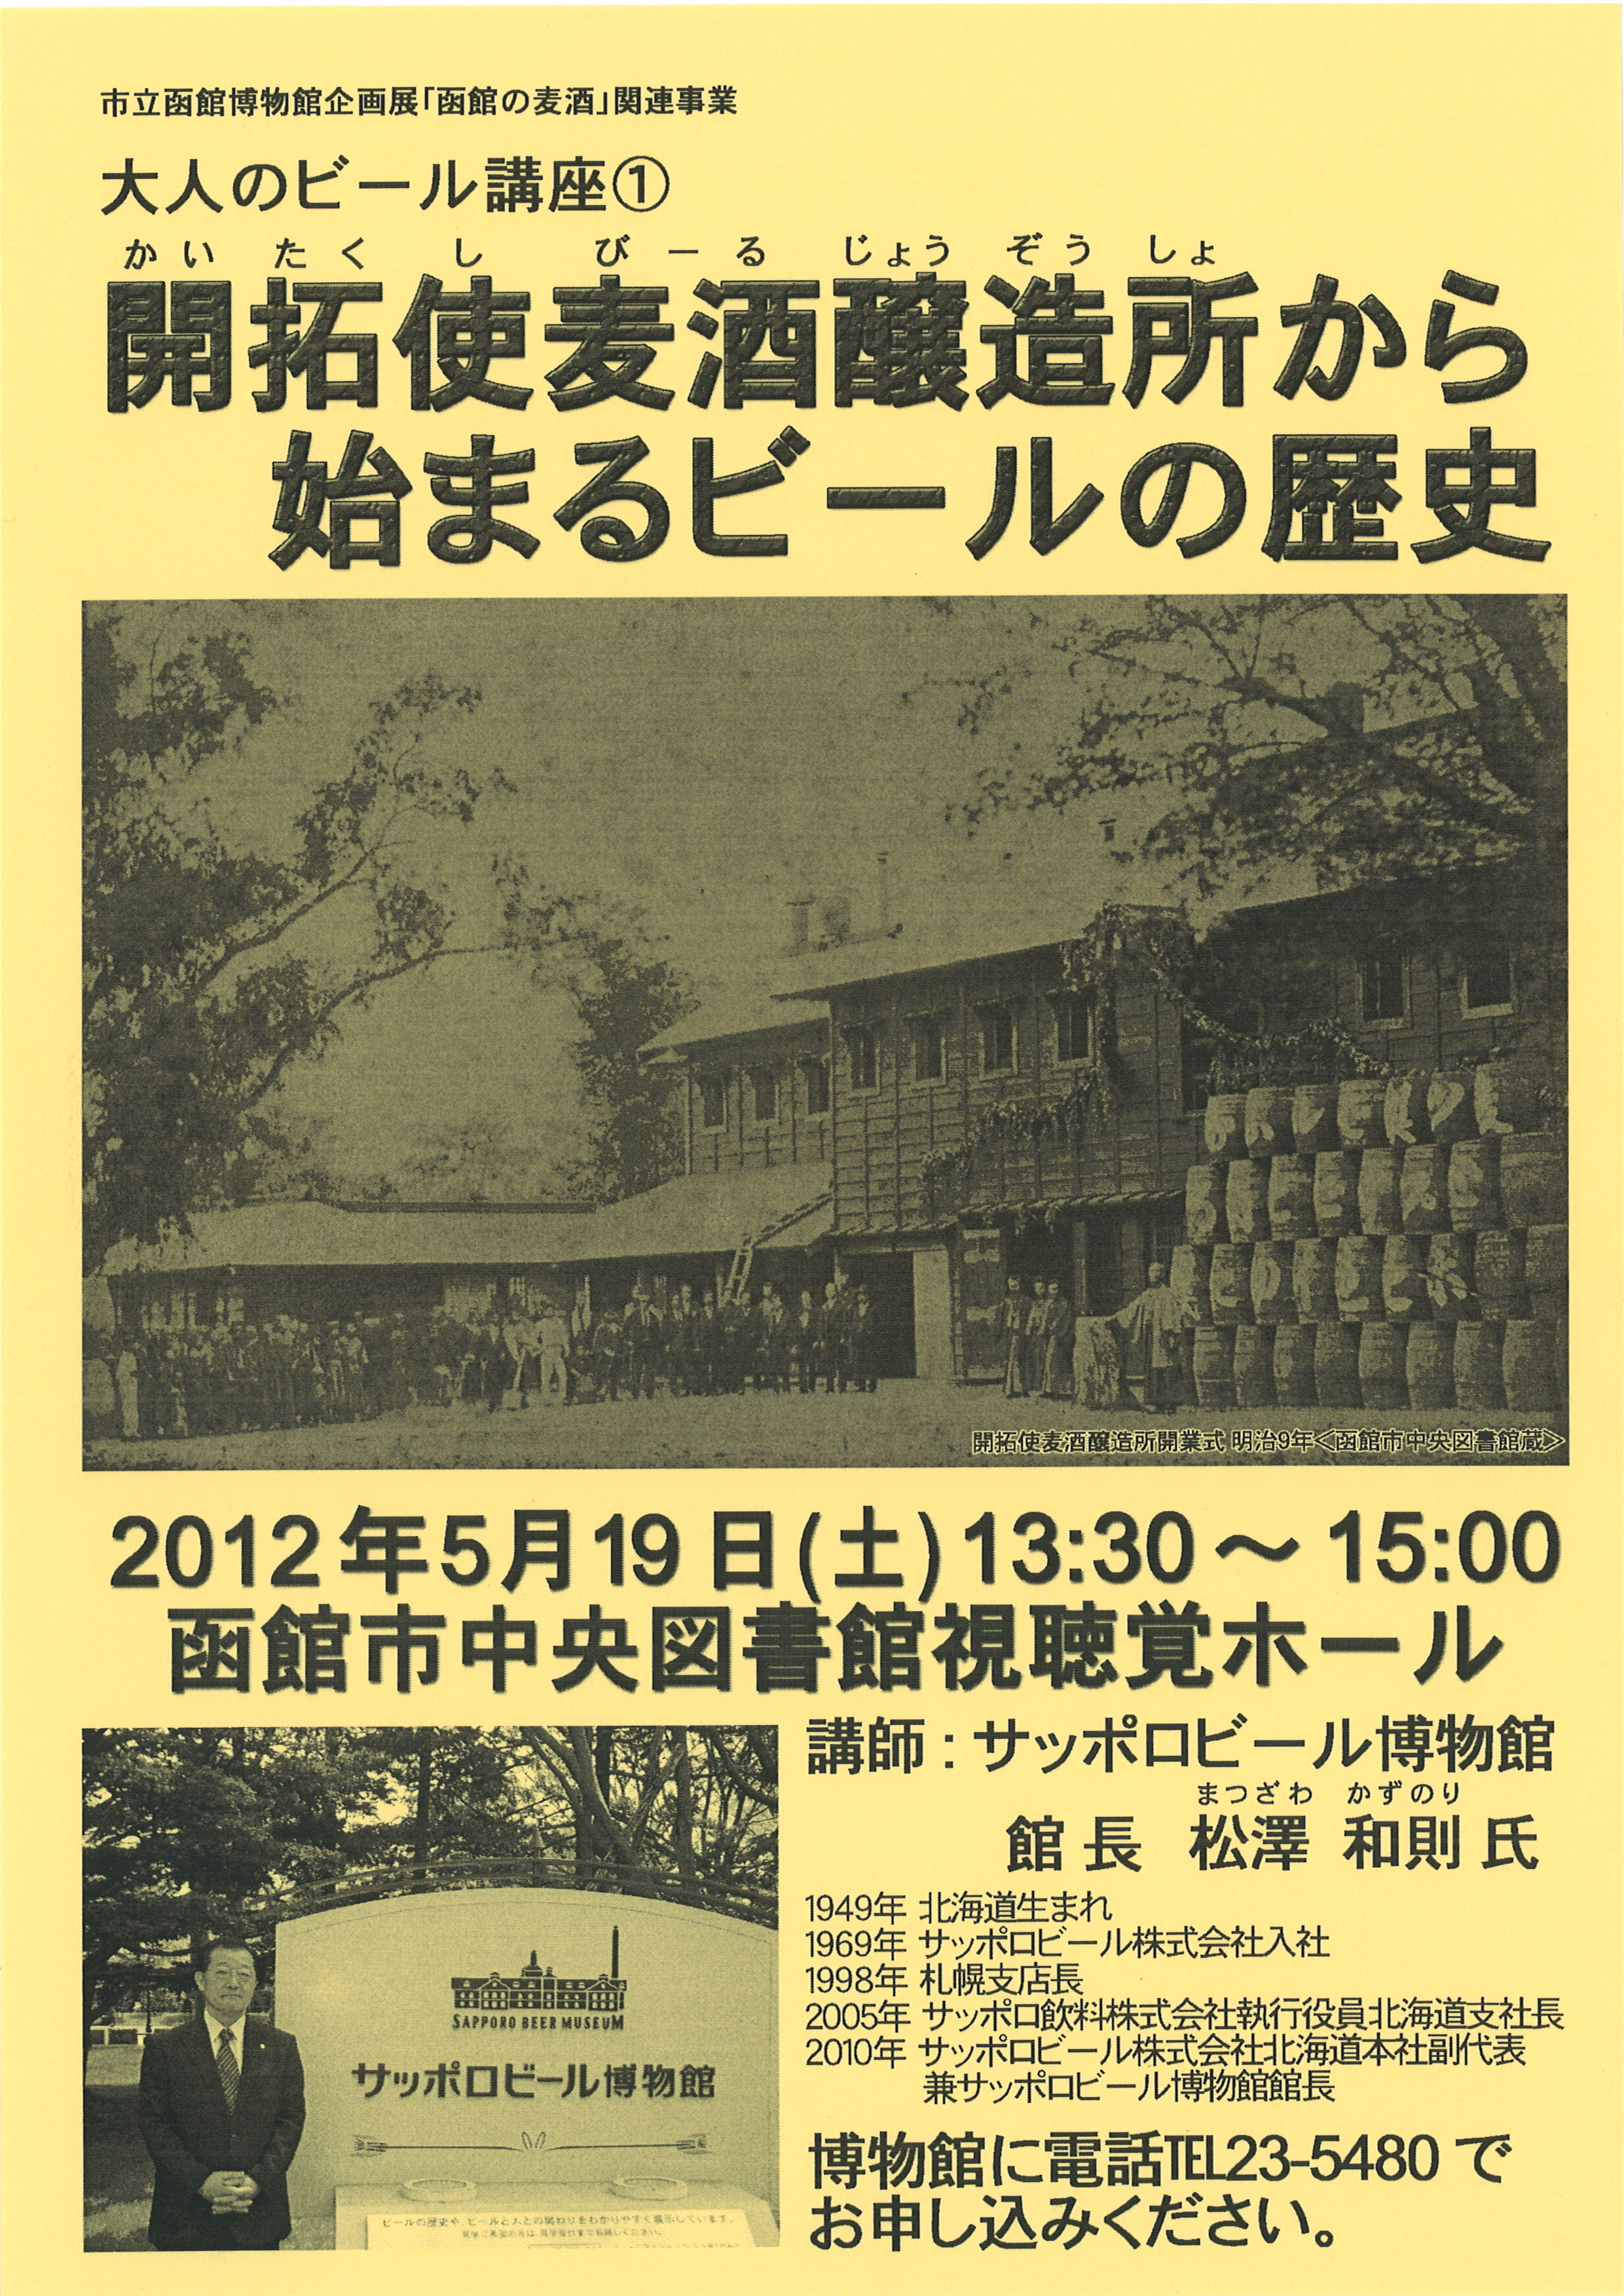 http://www.hakomachi.com/townnews/images/20120515145445_00005.jpg